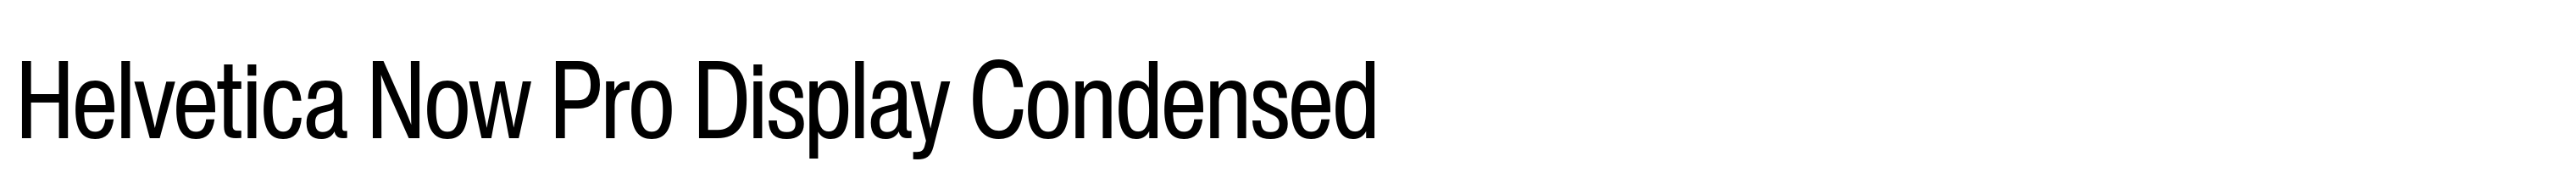 Helvetica Now Pro Display Condensed